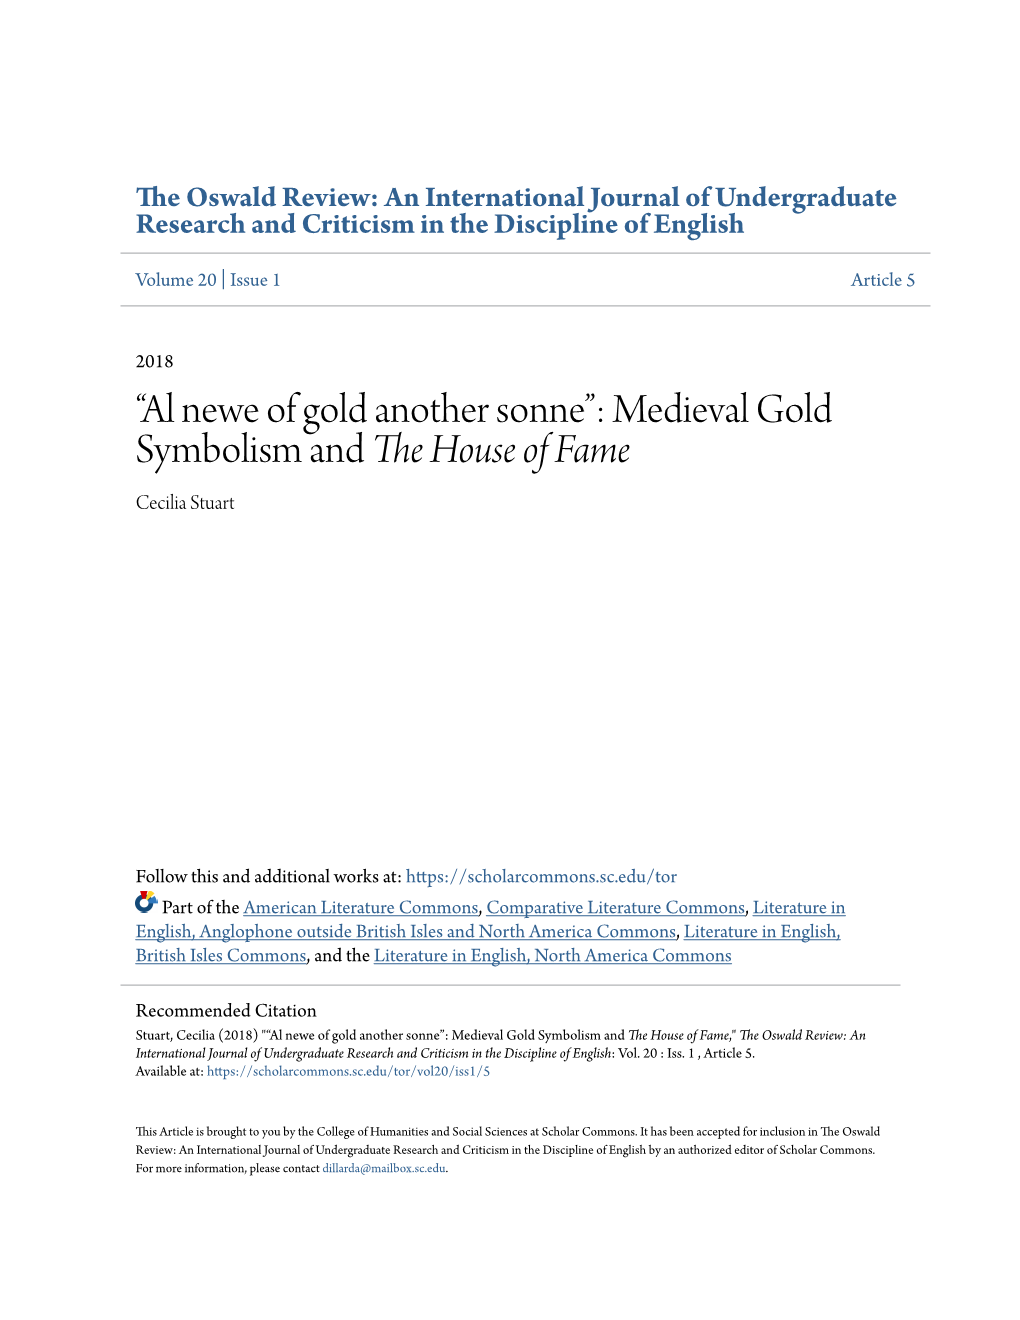 “Al Newe of Gold Another Sonne”: Medieval Gold Symbolism and &lt;I